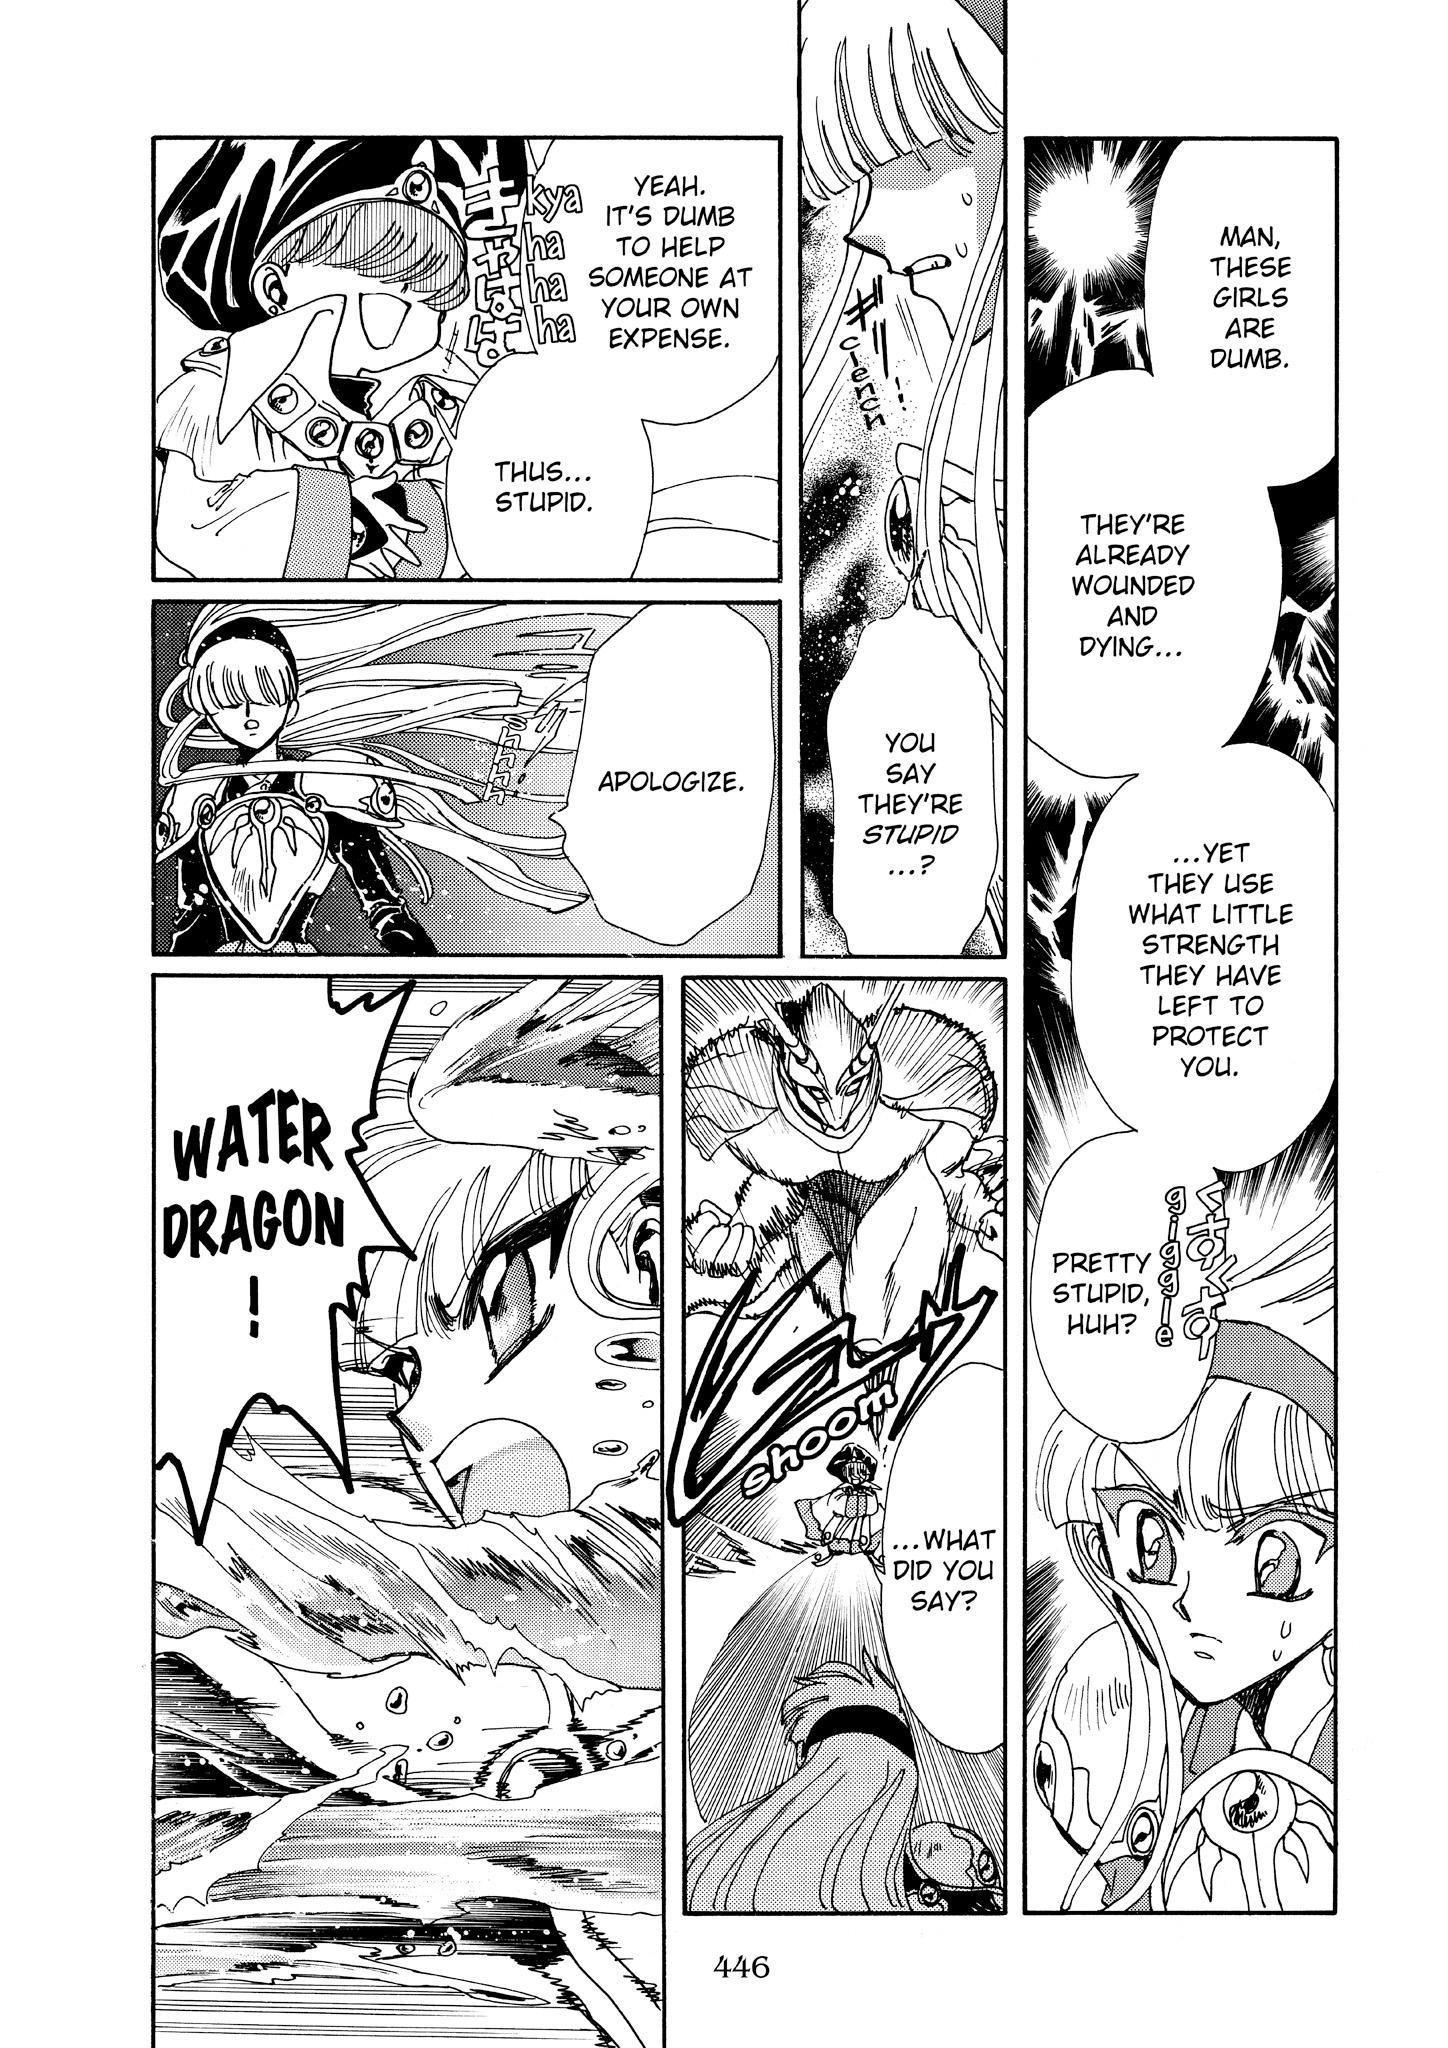 magic knight rayearth manga vol 7